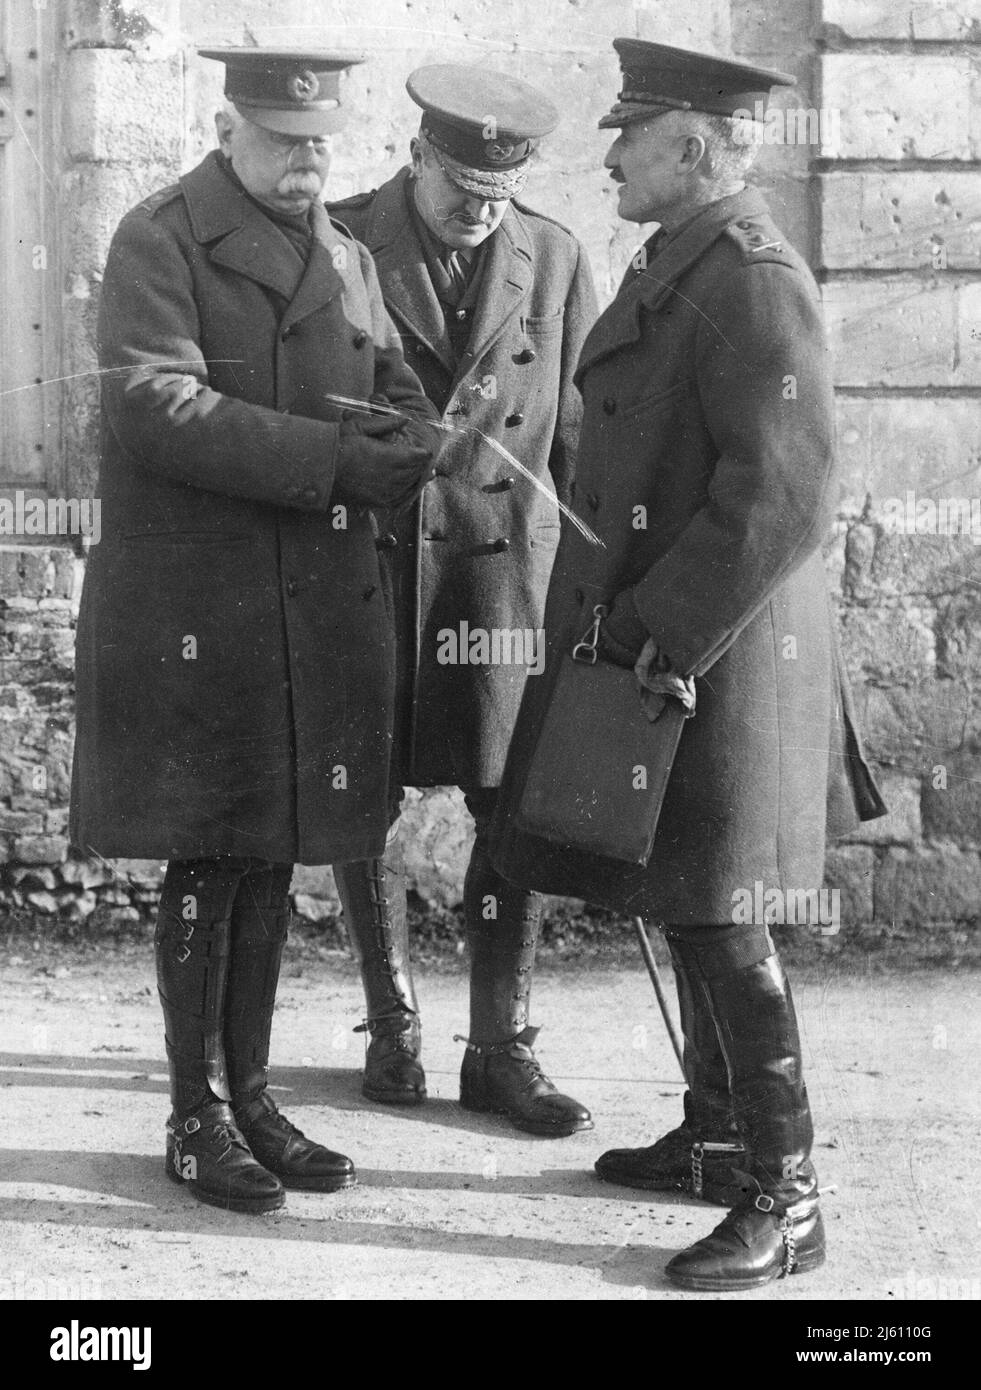 Tre comandanti dell'esercito. Generale Sir Herbert Plumer, K.C.M.G., K.C.B., Generale Sir E.H.H Allenby K.C.B, Generale H.S. HORNE K.C.B.' Foto Stock